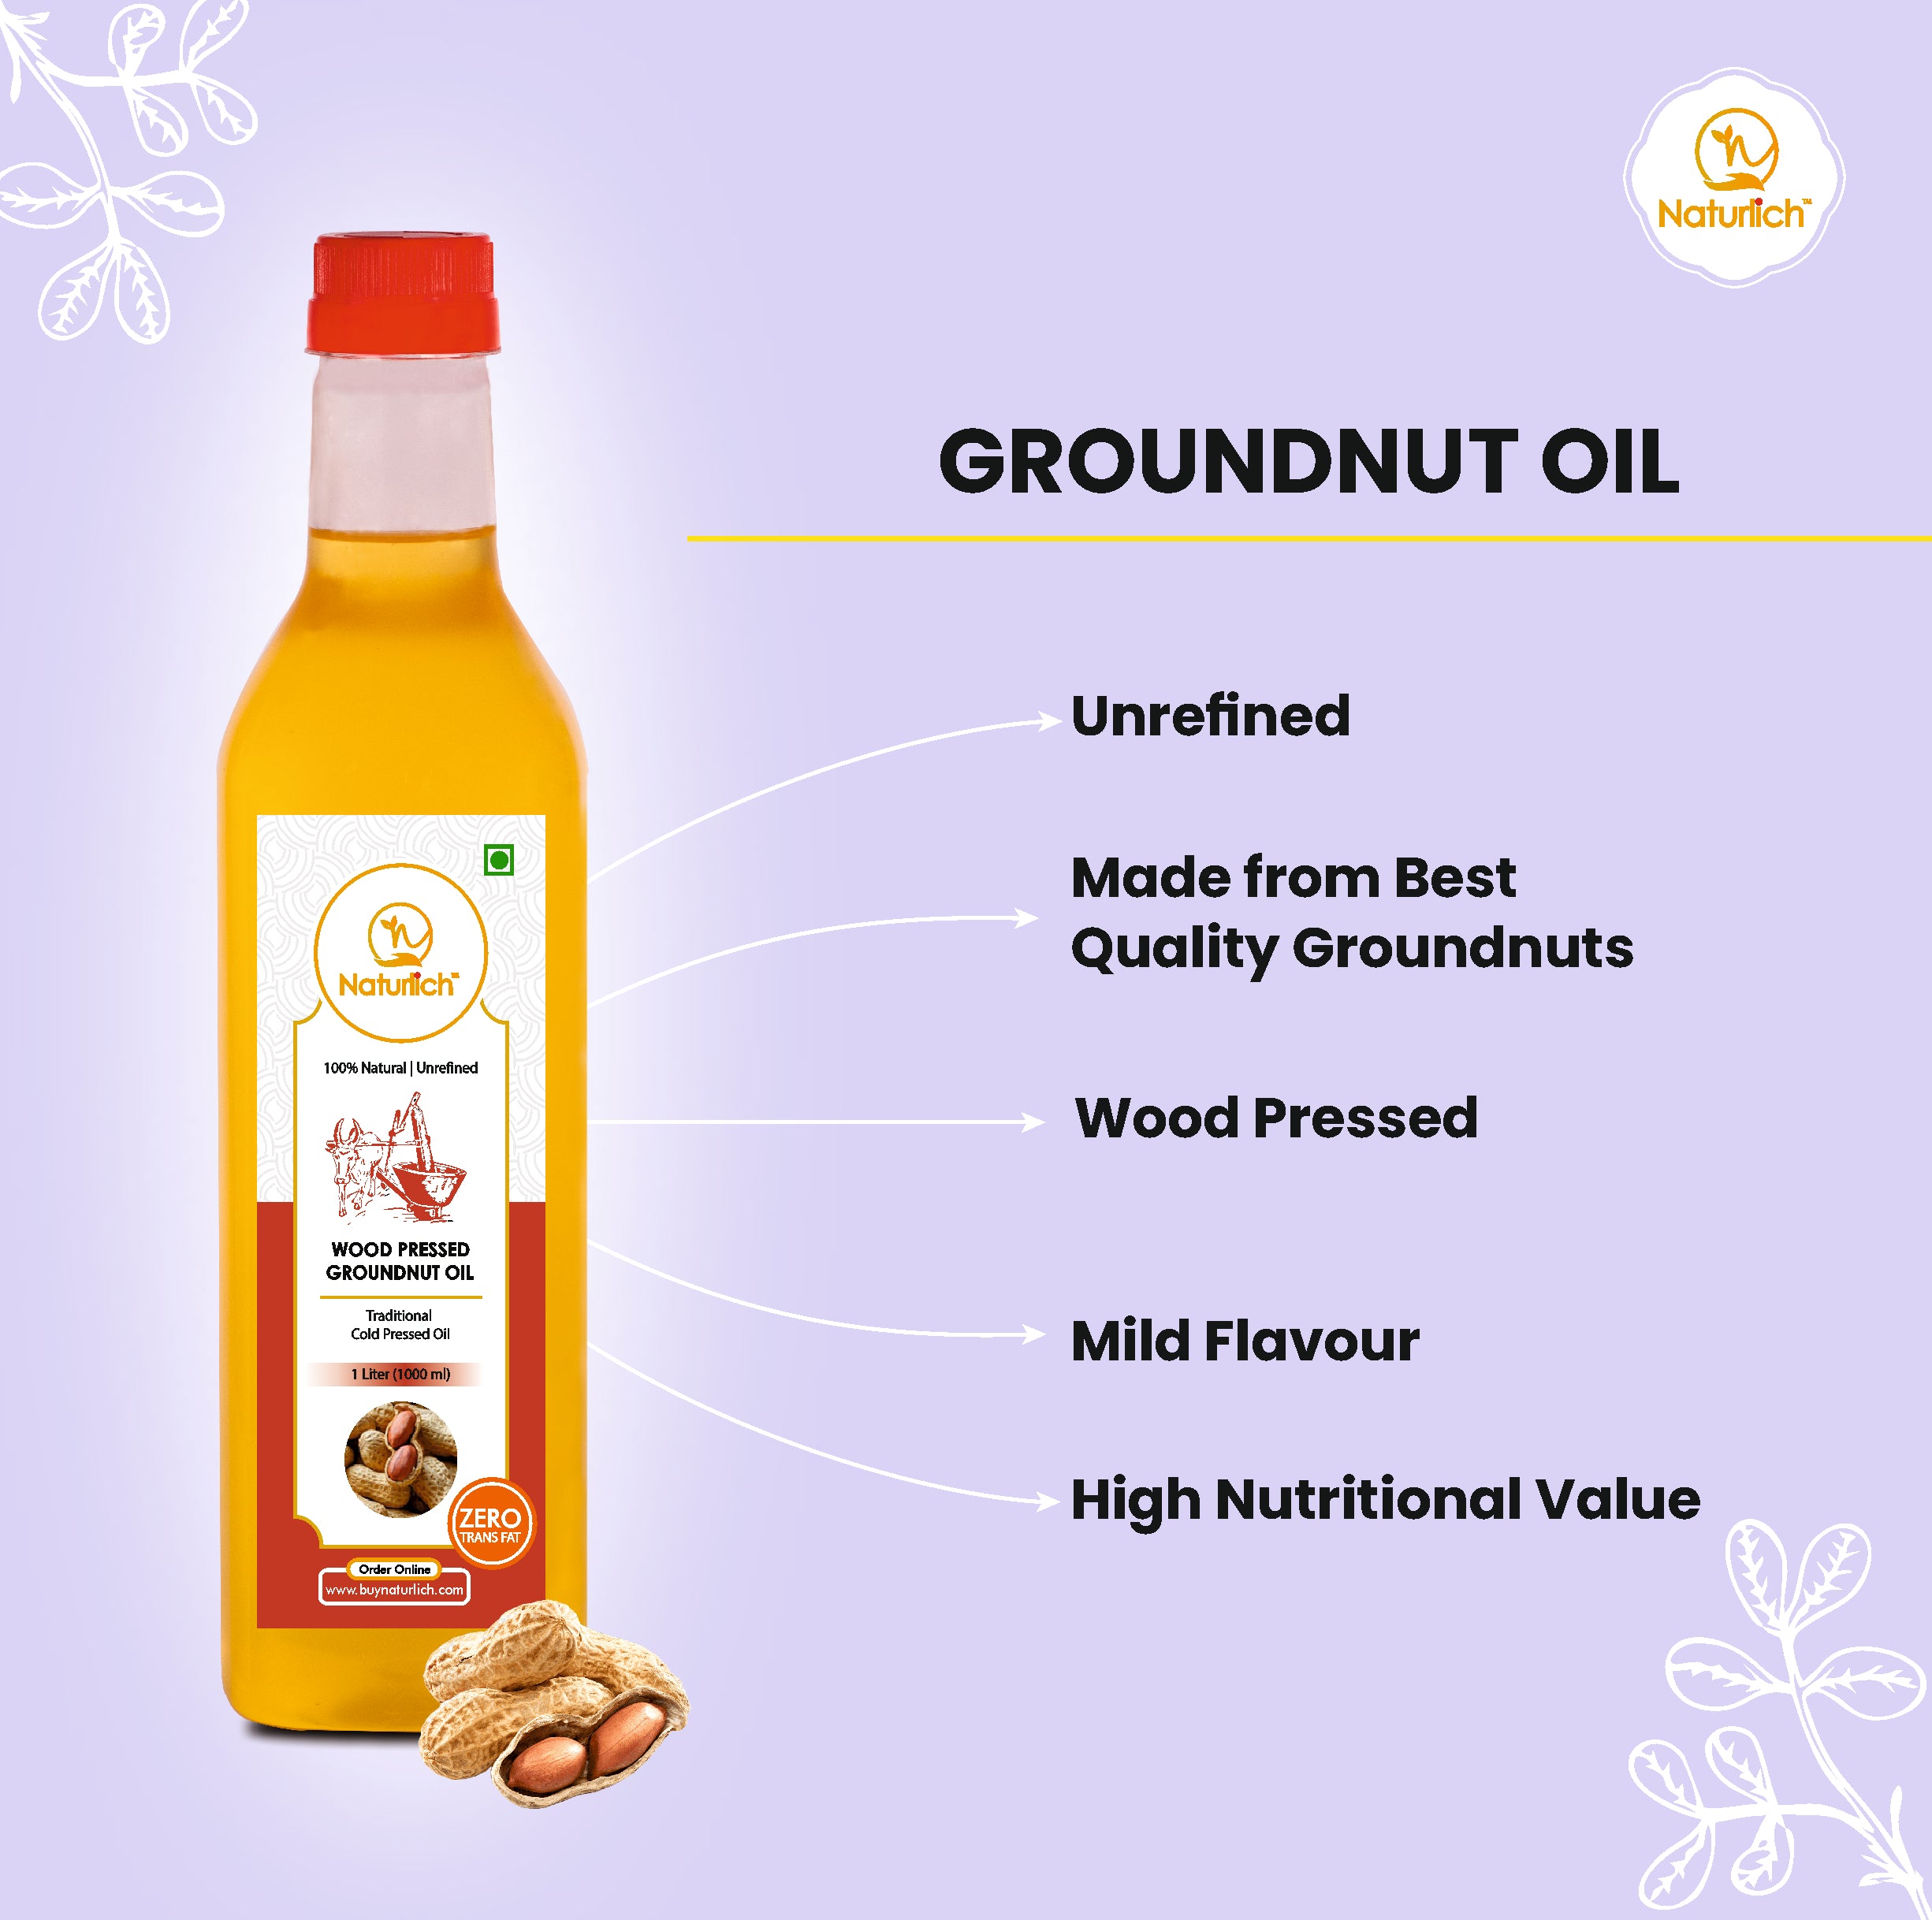 Wood Pressed Groundnut Oil | Cold Pressed Groundnut Oil | Kachhi Ghani Oil | Naturlich Lakdi Ghani Oil